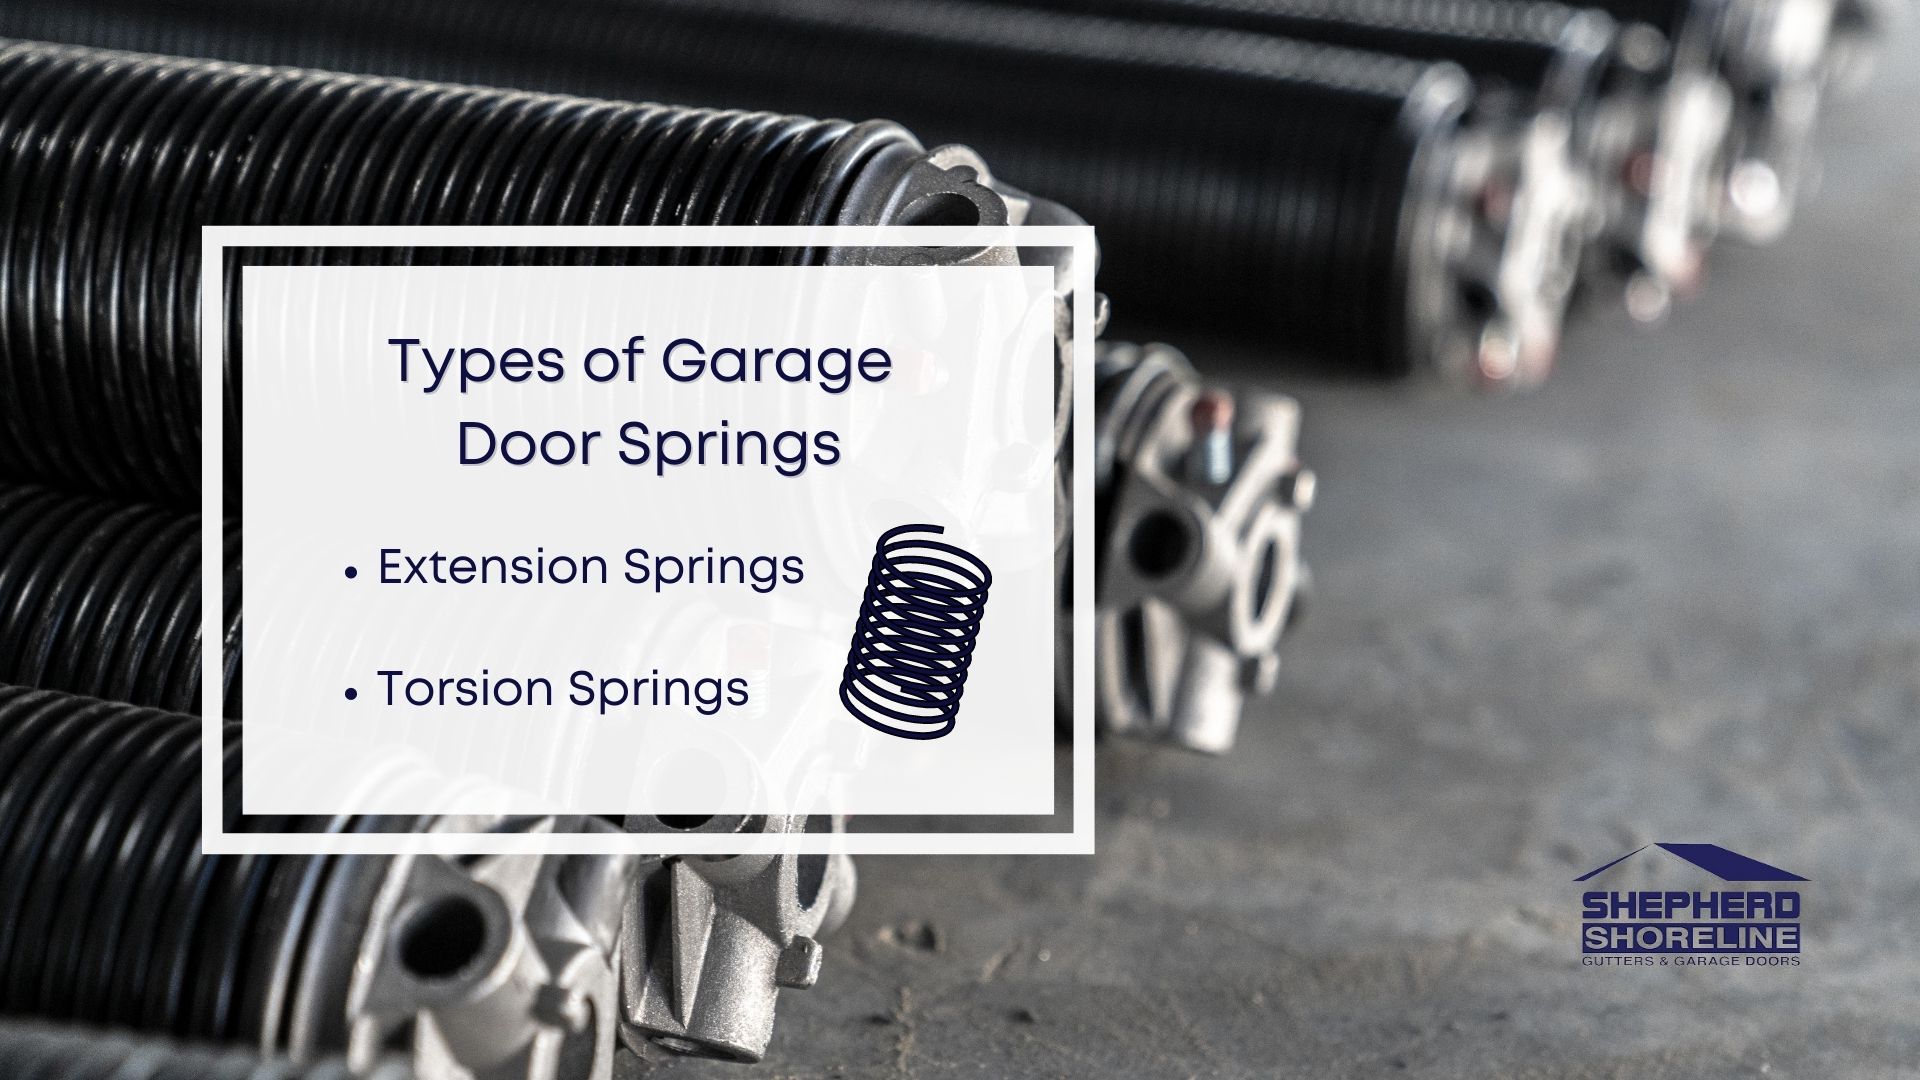 Infographic image of the types of garage door springs